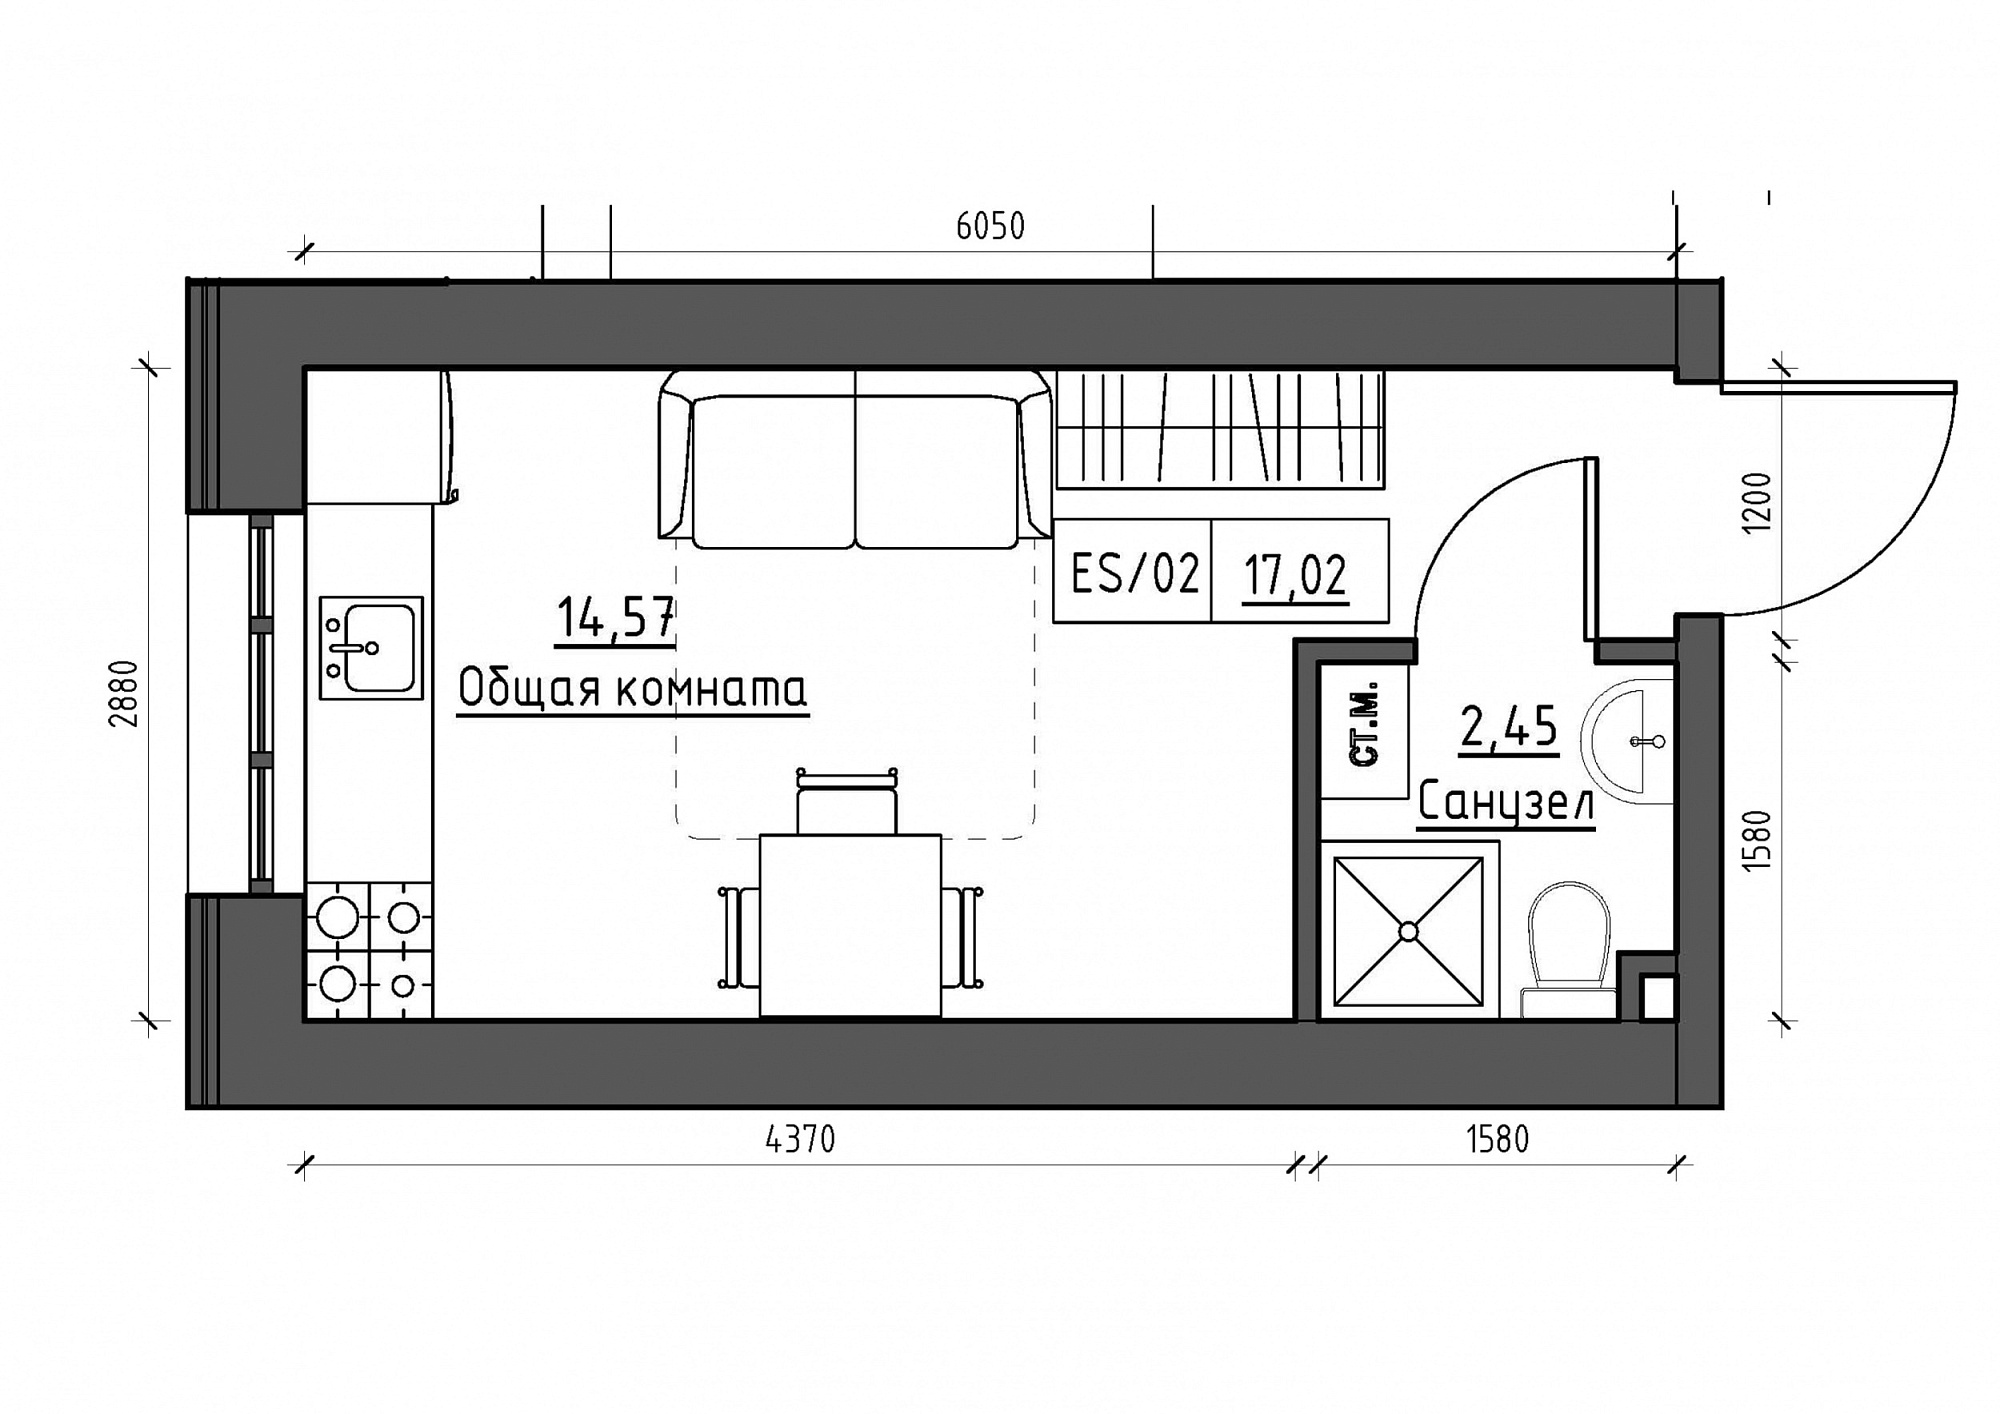 Planning Smart flats area 17.02m2, KS-011-05/0002.